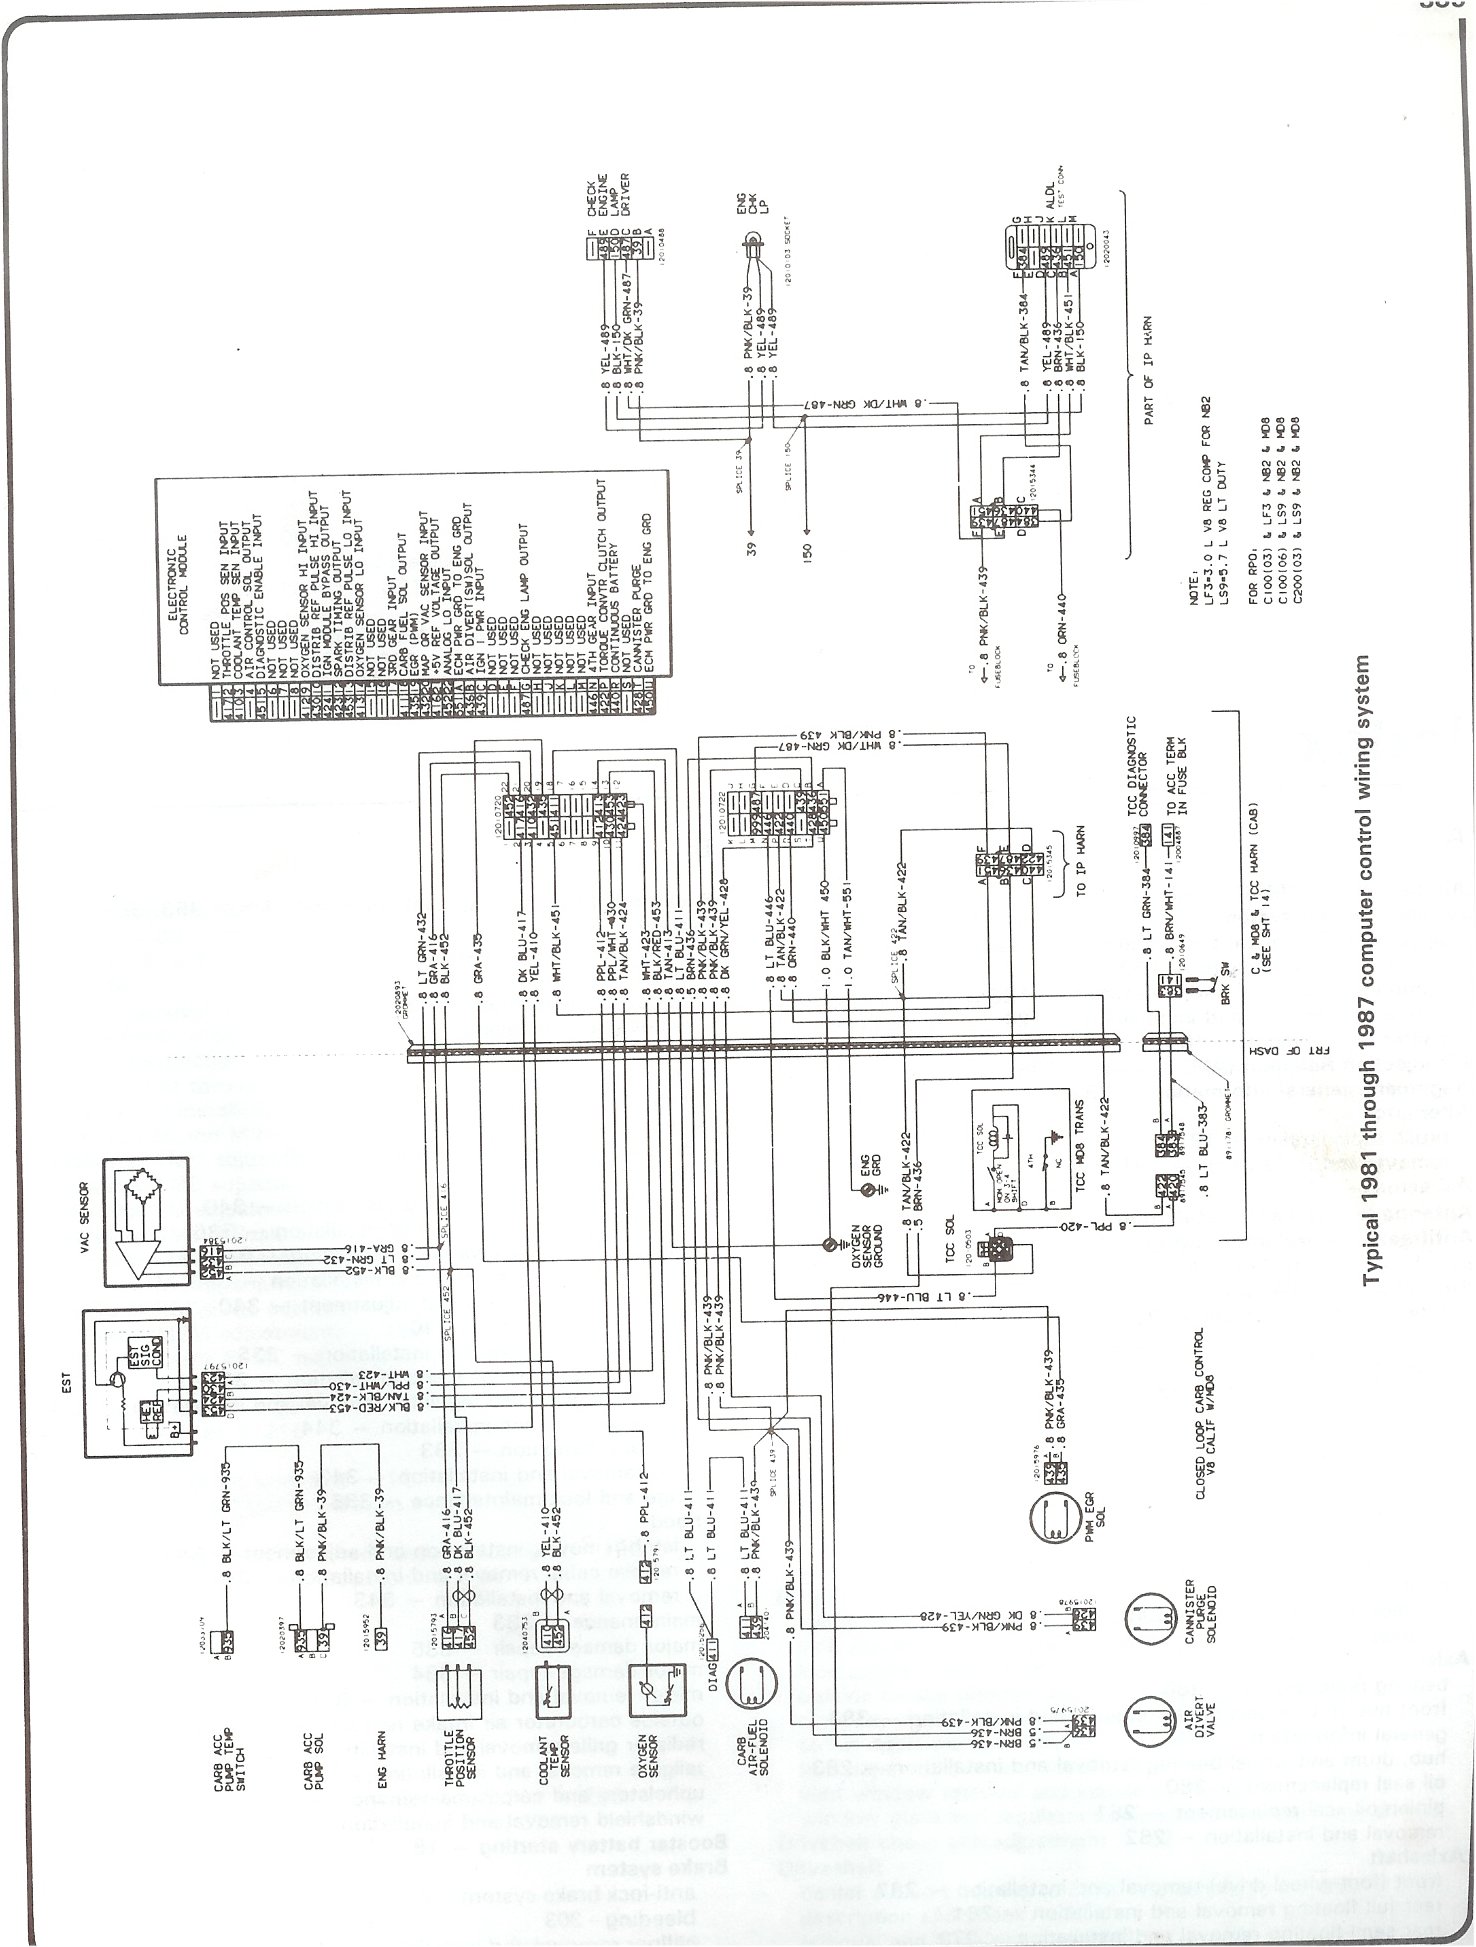 27 1980 Chevy Truck Wiring Diagram - Wiring Database 2020